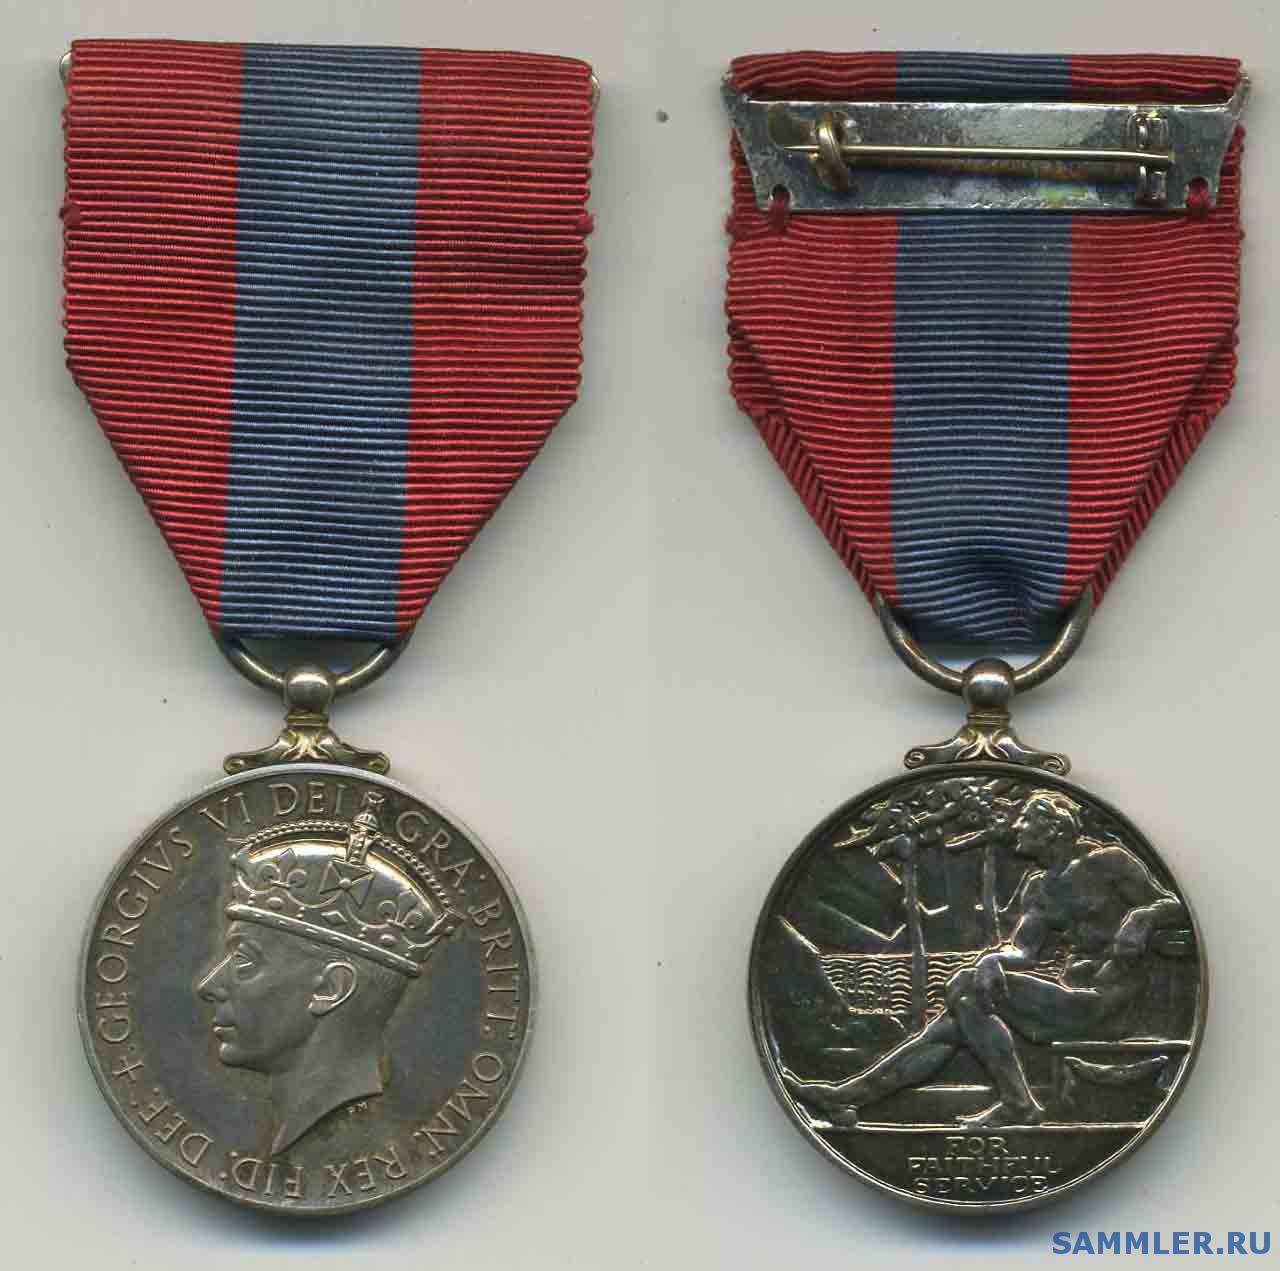 Imperial_Service_Medal__G_VI_2nd_type_.jpg